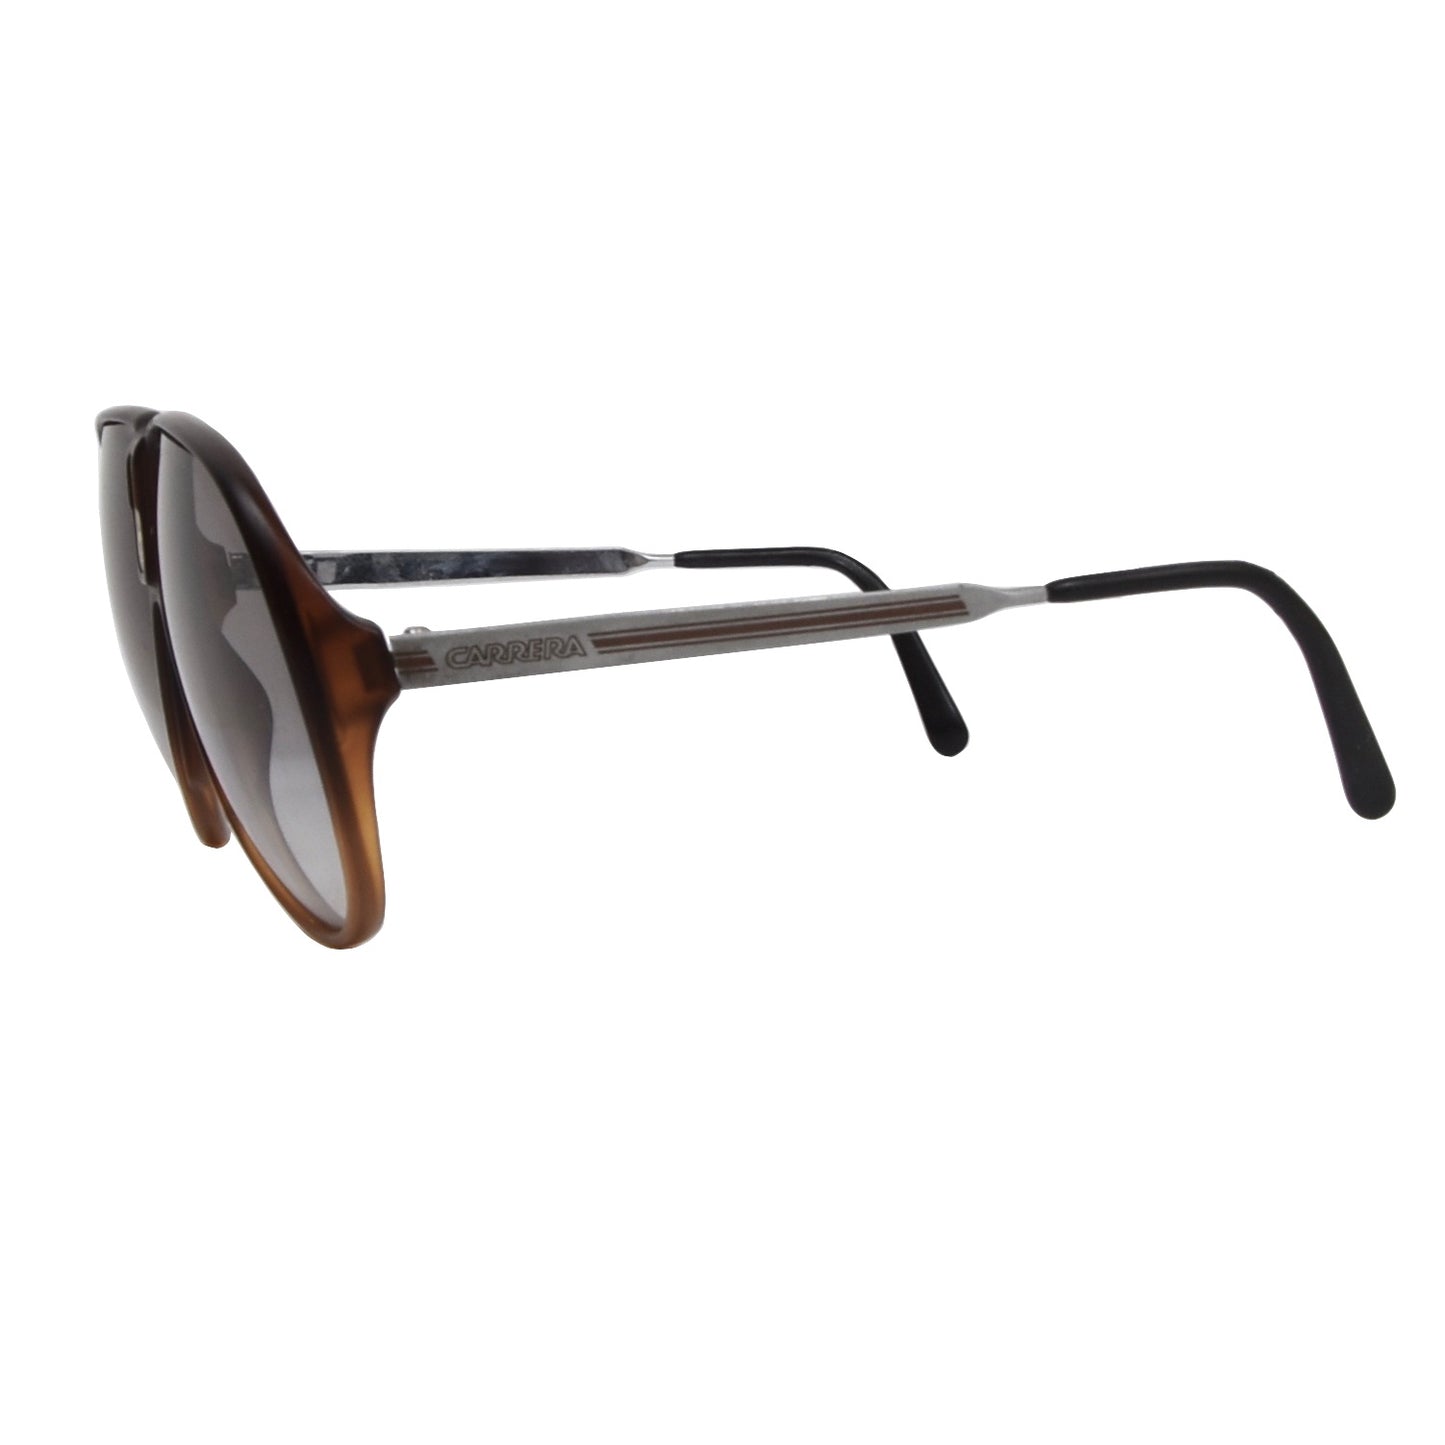 Carrera Mod. 5574 Sunglasses- Brown Gradient